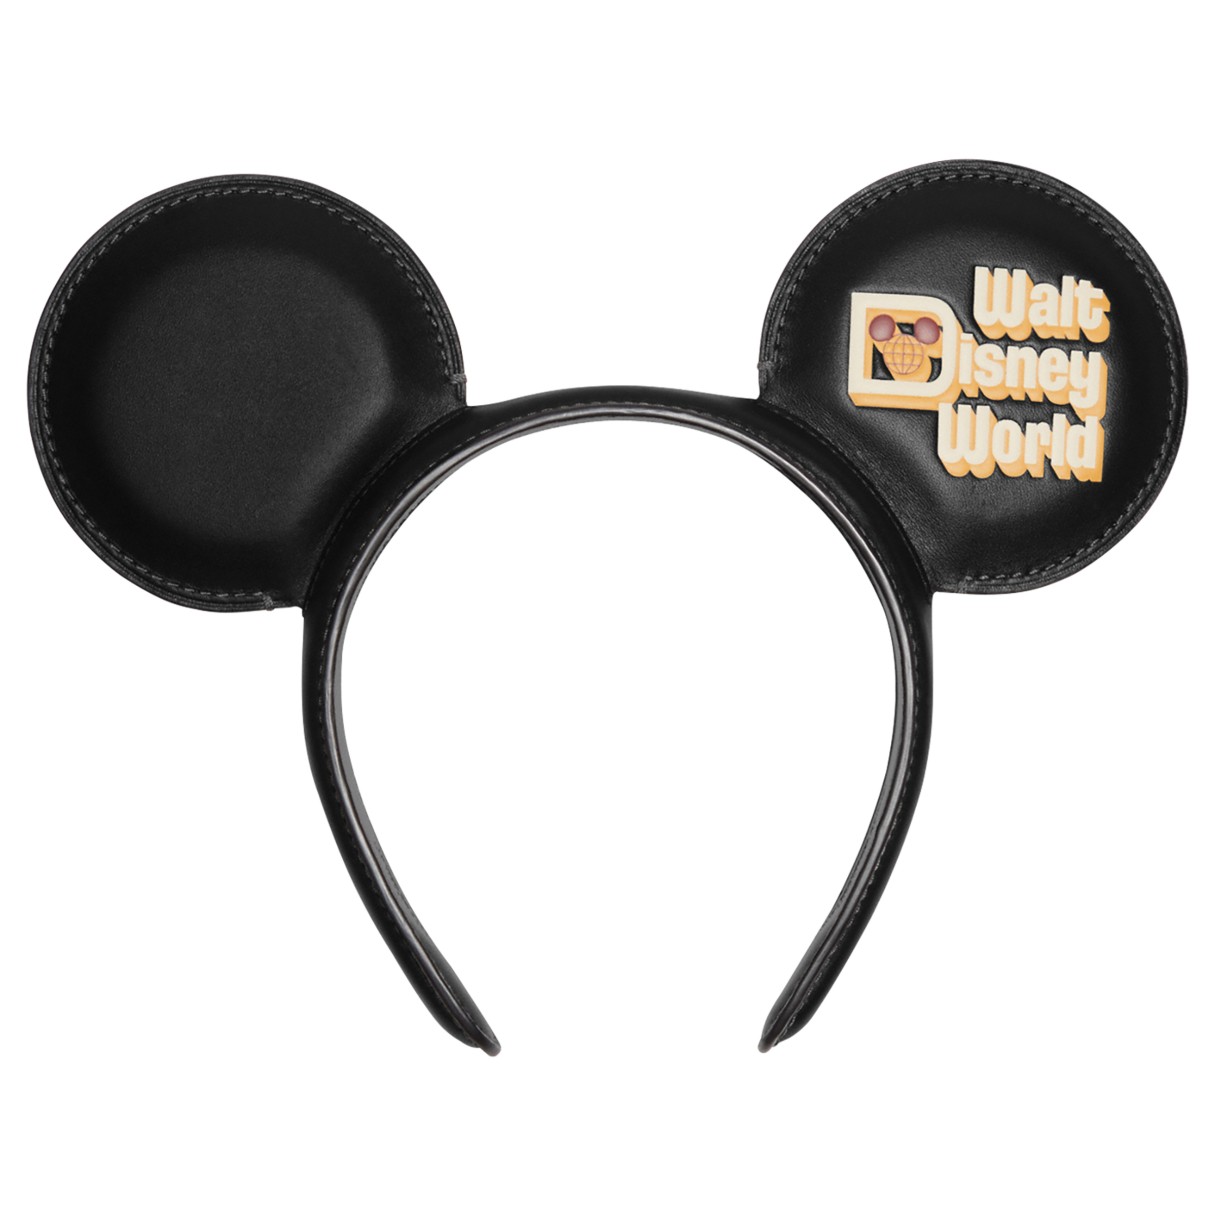 Walt Disney World Mickey Mouse Ear Headband by COACH